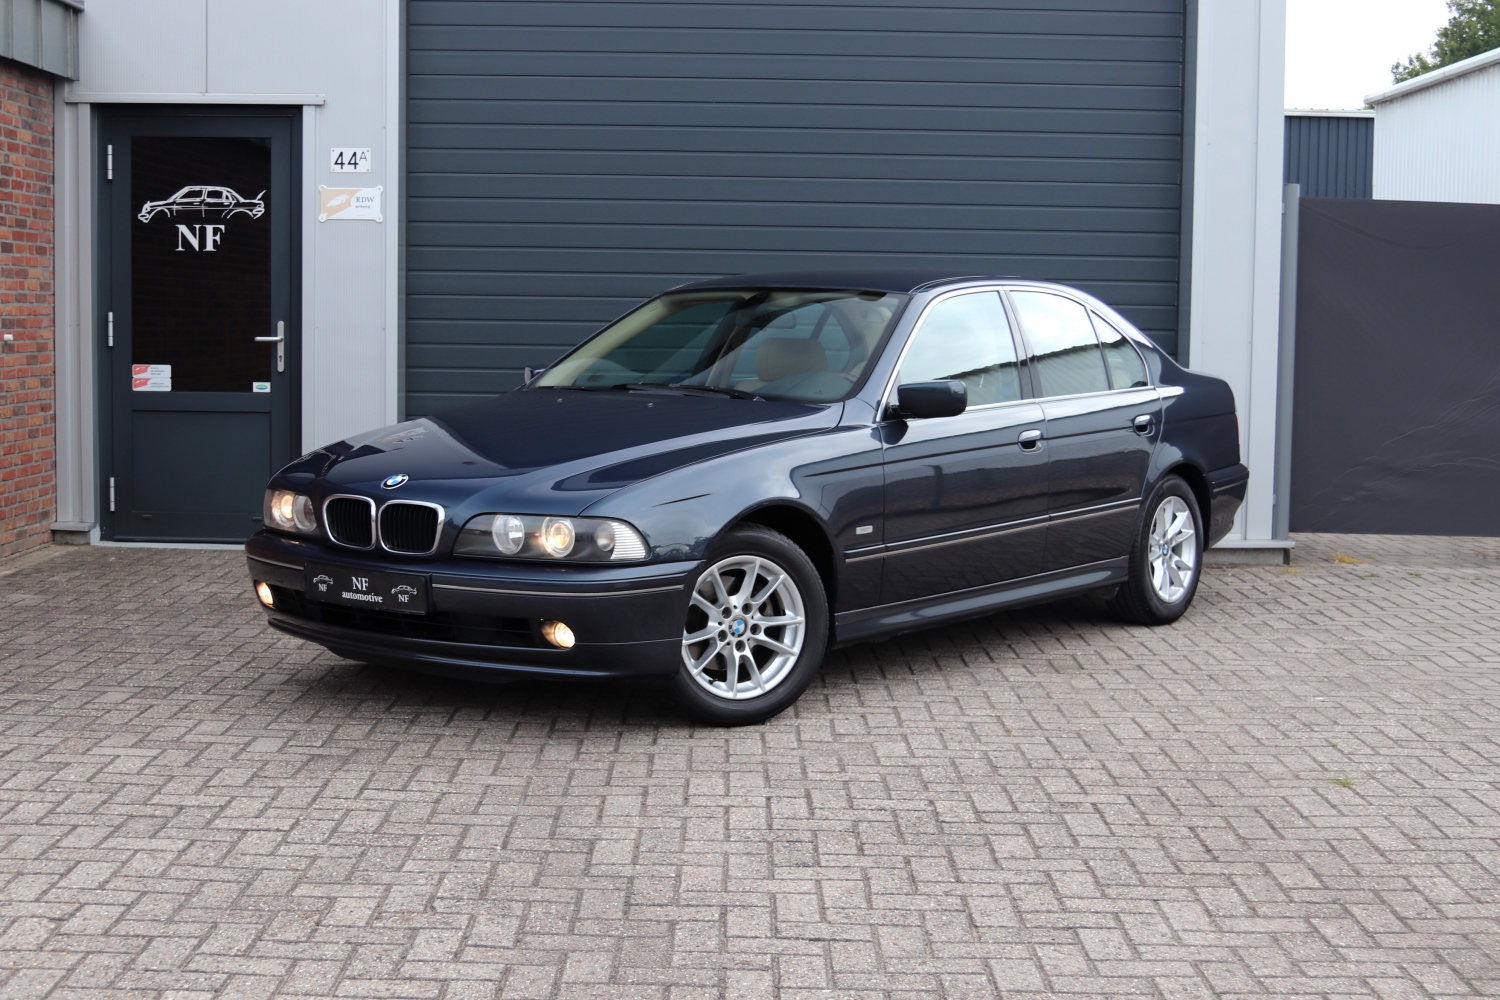 BMW-520i-Sedan-E39-2003-41NBNF-001.JPG